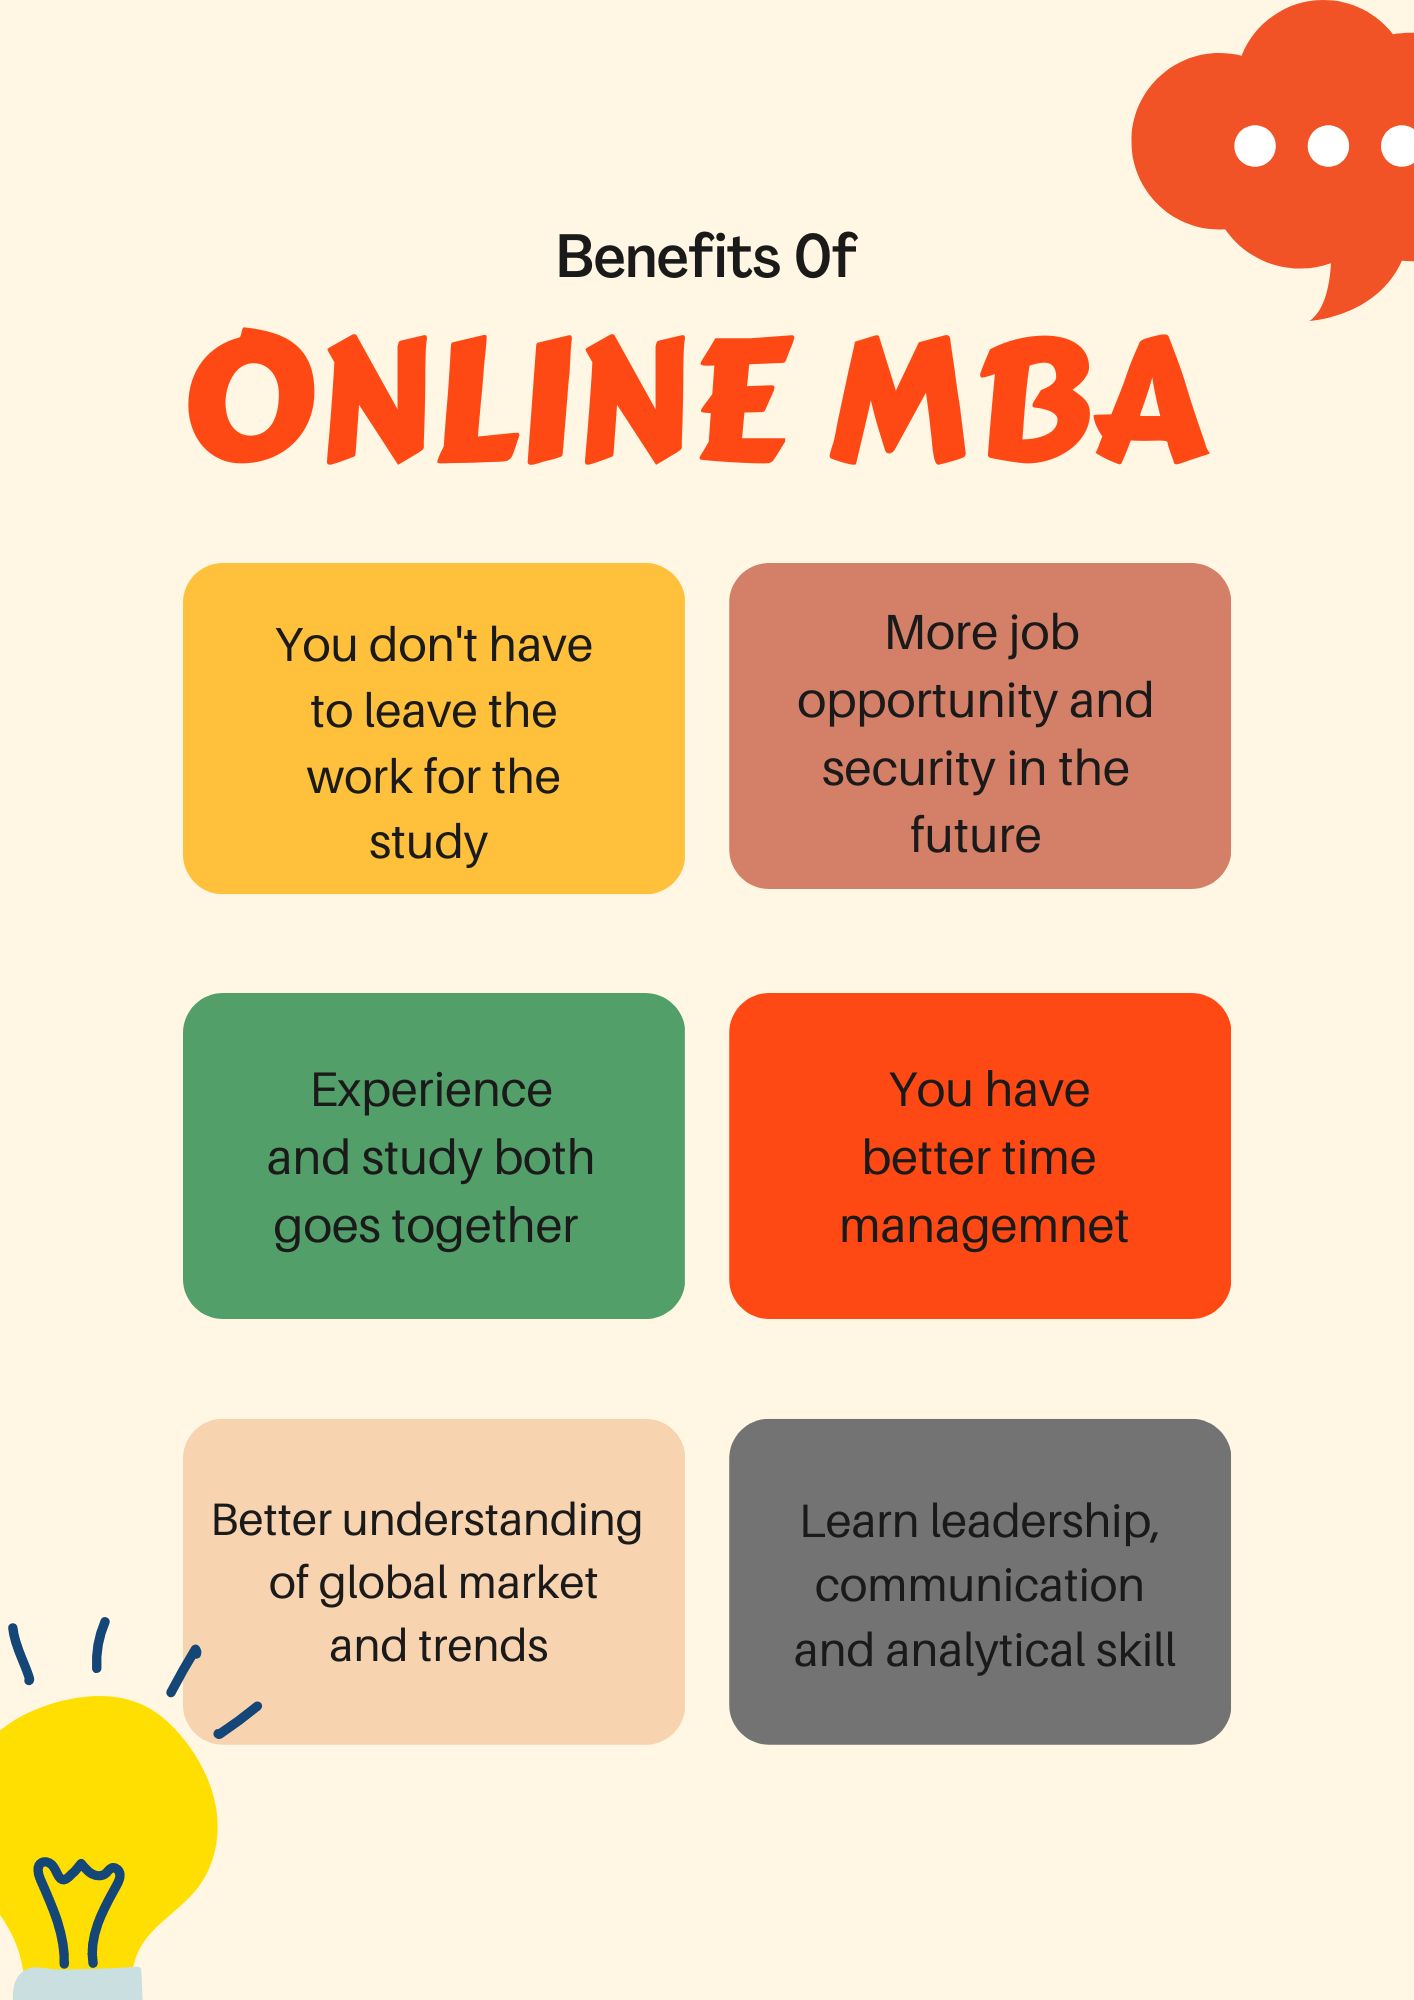 Benefits of online mba program